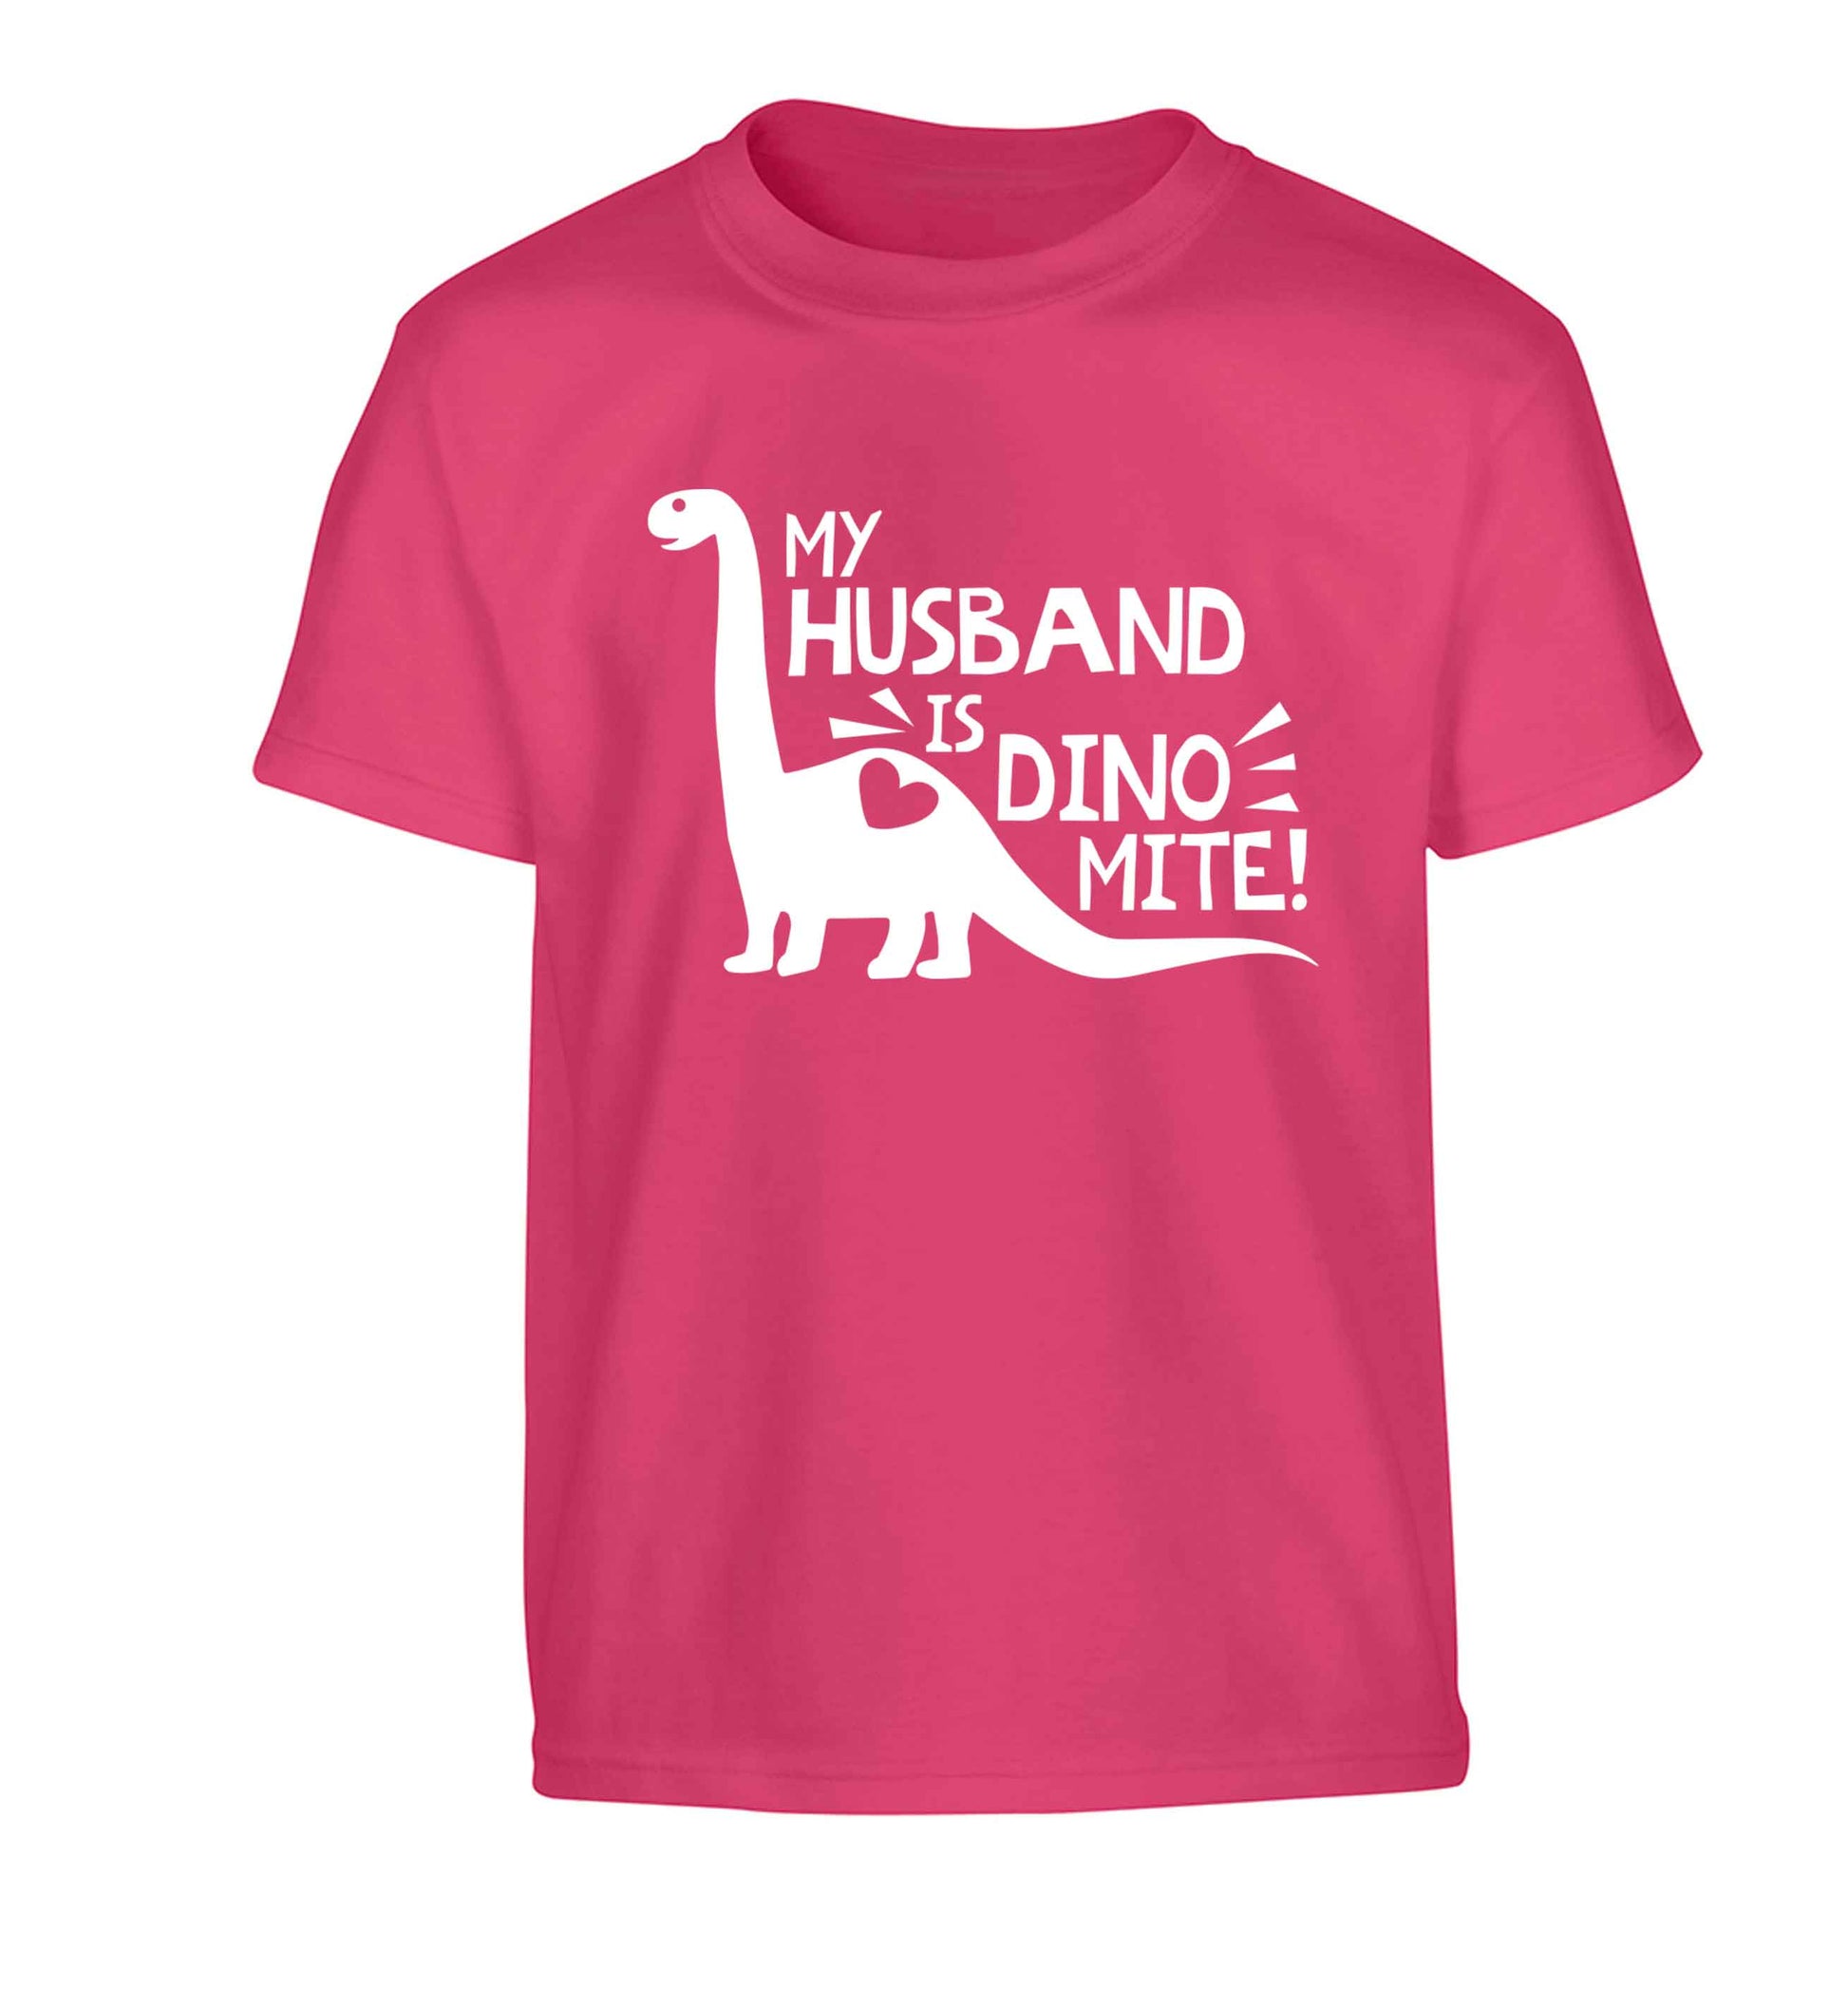 My husband is dinomite! Children's pink Tshirt 12-13 Years